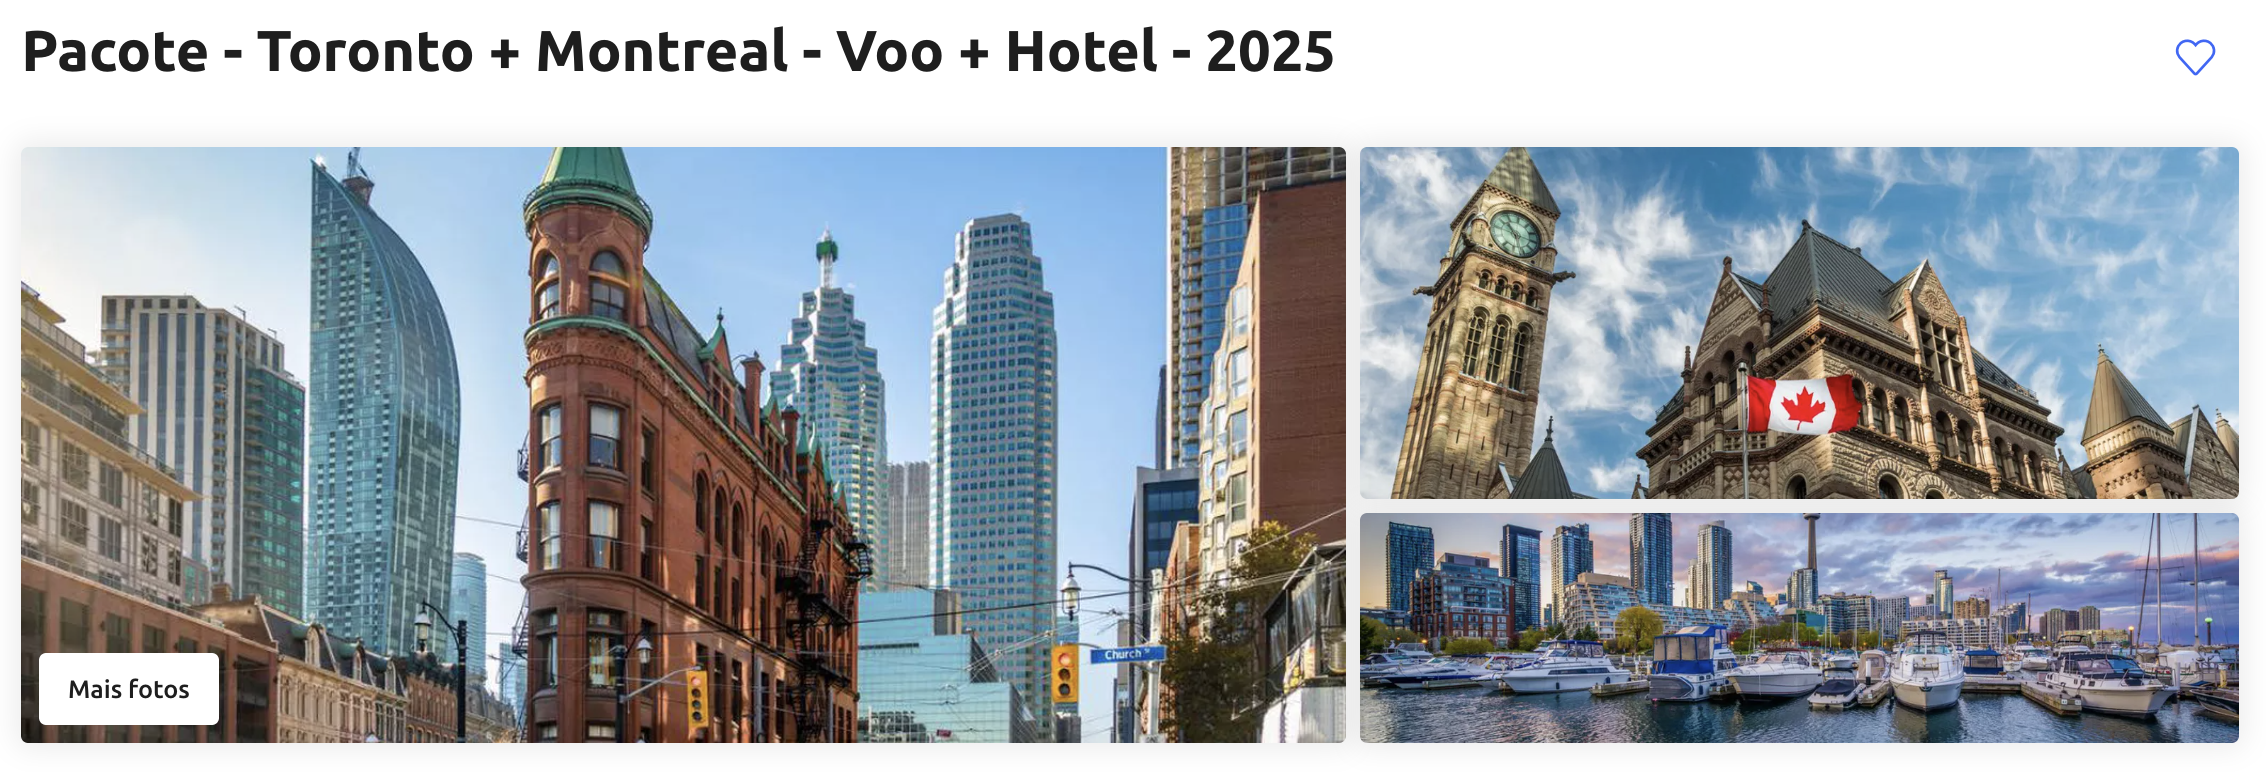 Pacote - Toronto + Montreal - Voo + Hotel - 2025